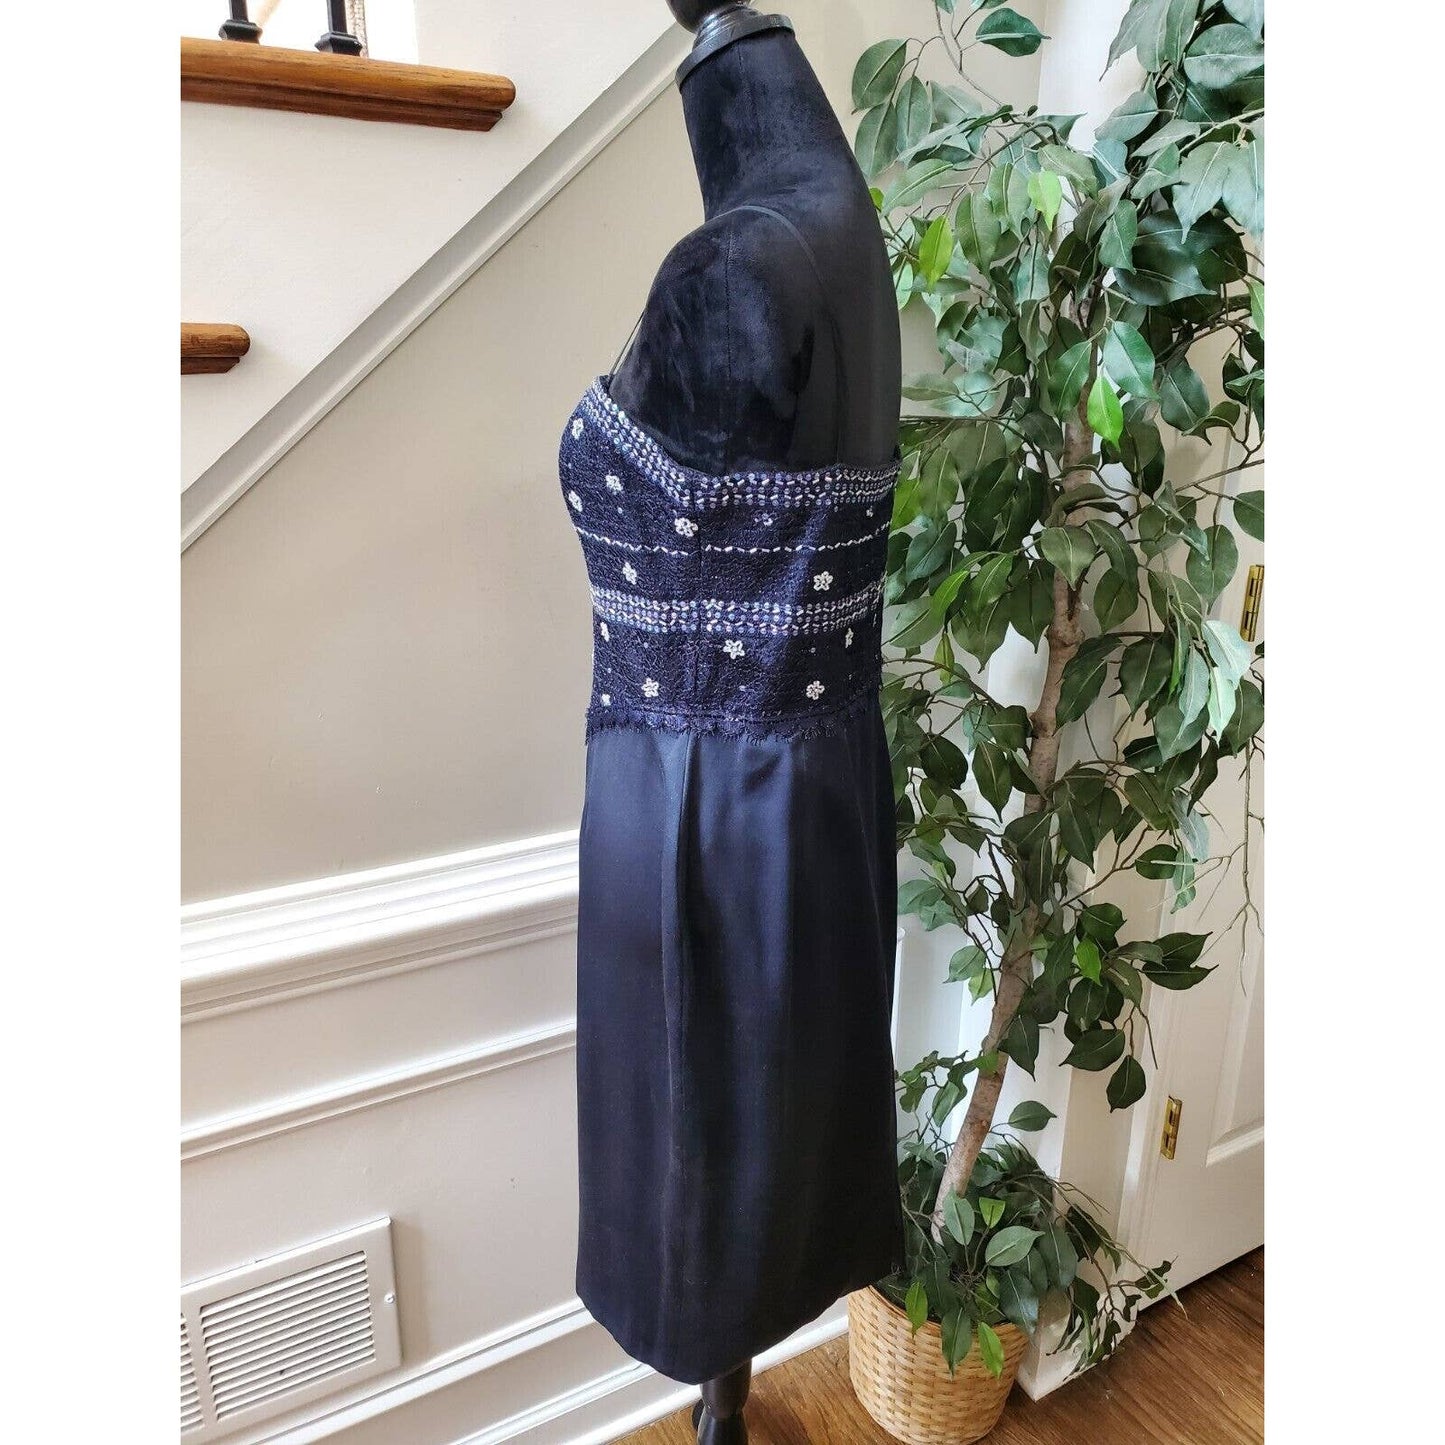 Vintage Women's Blue Polyester Sleeveless Dressy Strappy Knee Length Dress S